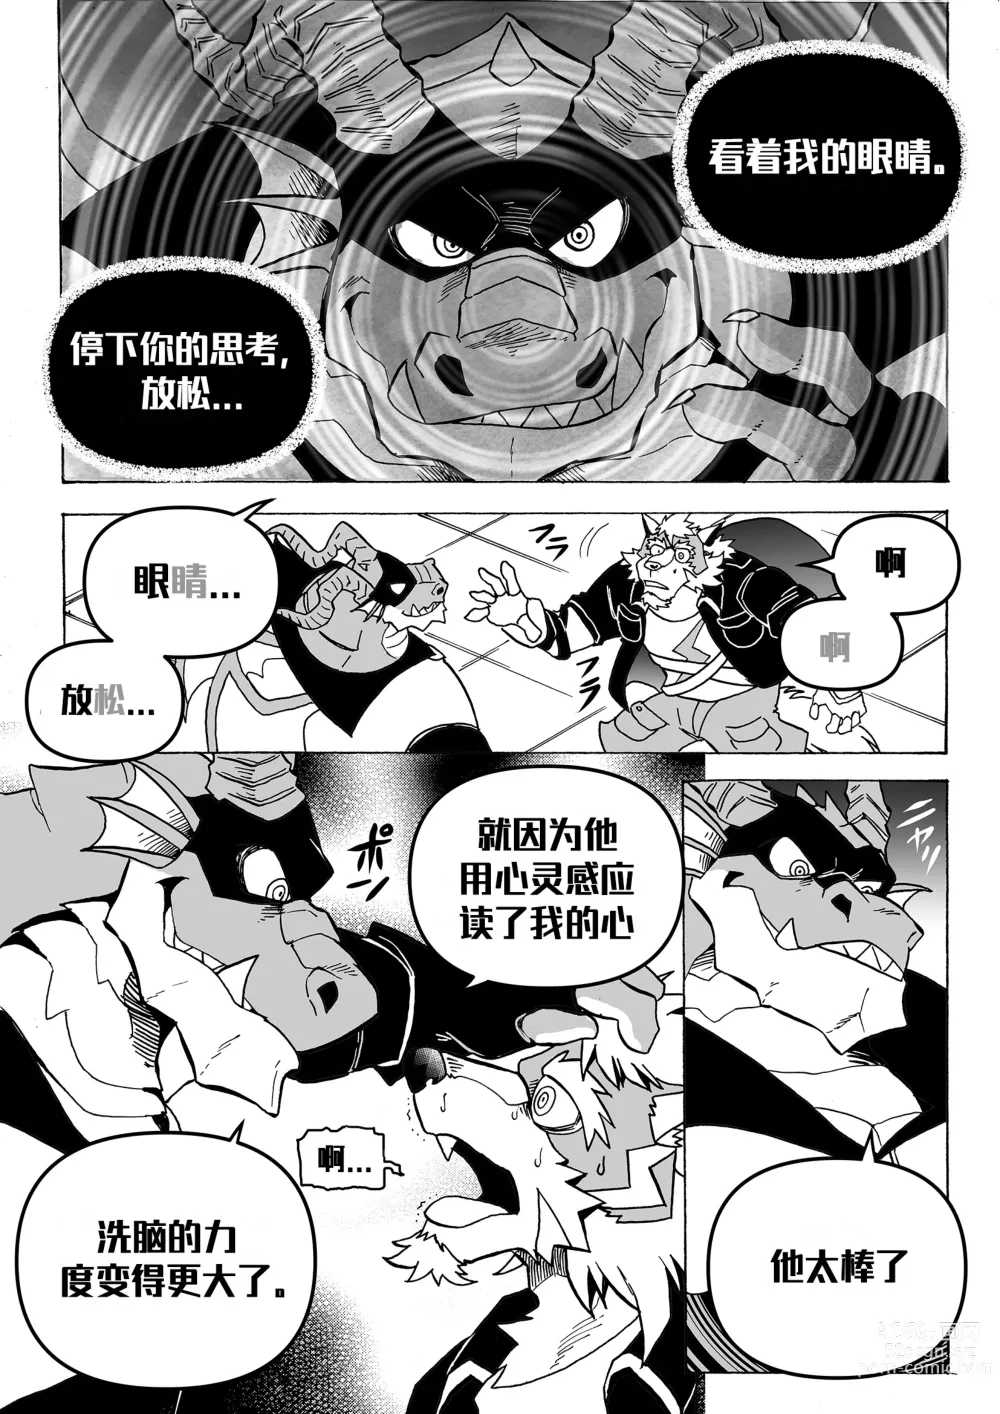 Page 6 of doujinshi 直至读心英雄恶堕为止『簡中翻訳』